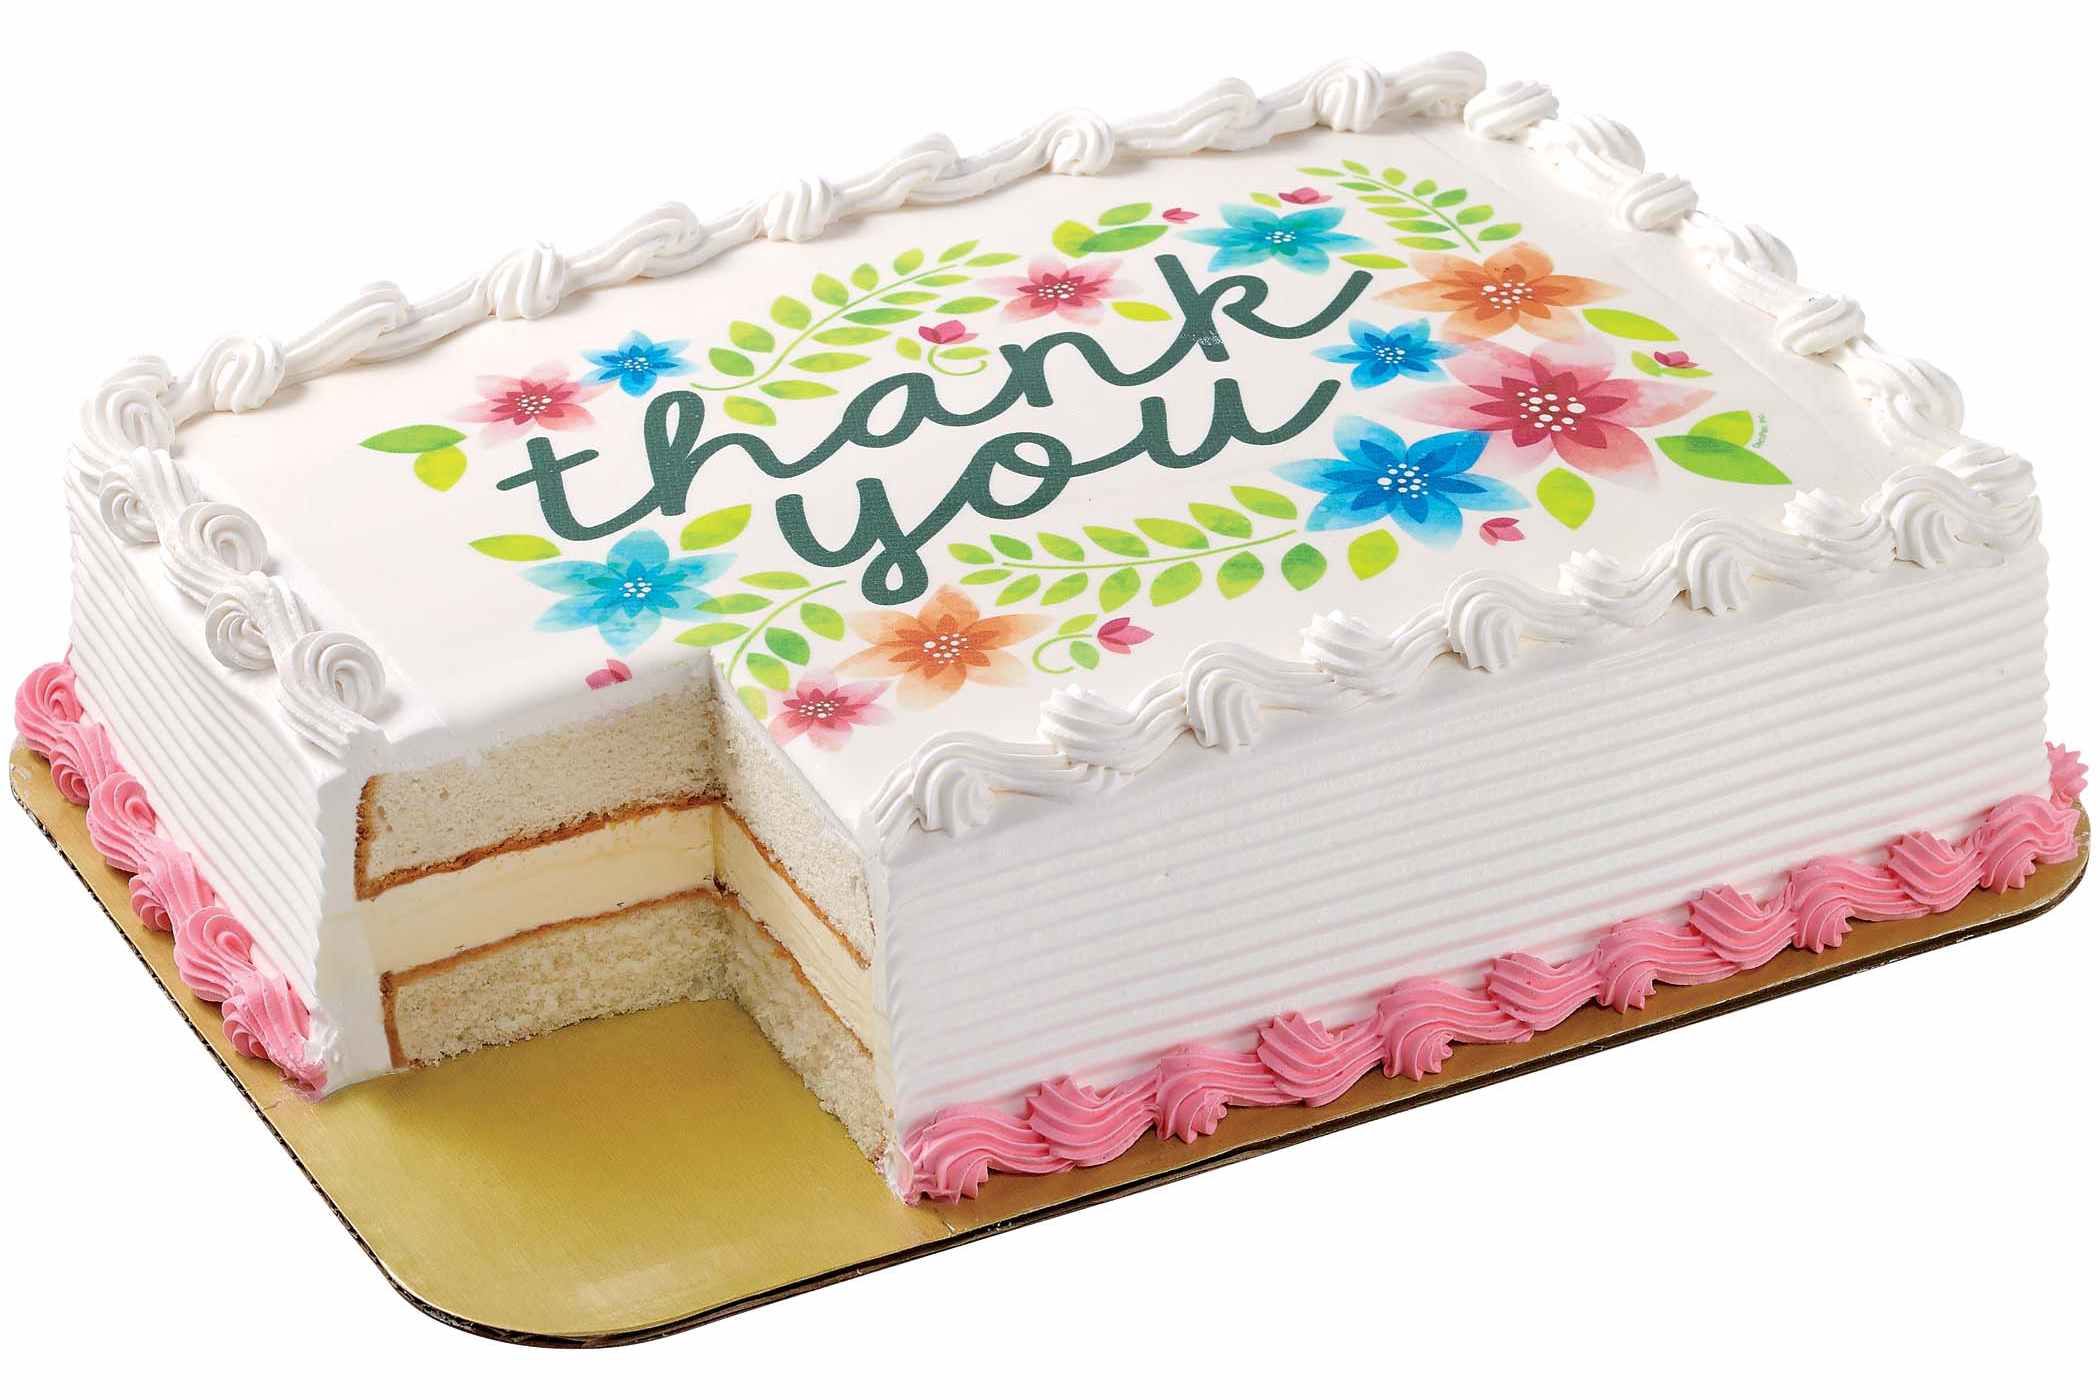 H-E-B Bakery Thank You Vanilla Ice Cream Cake; image 2 of 2